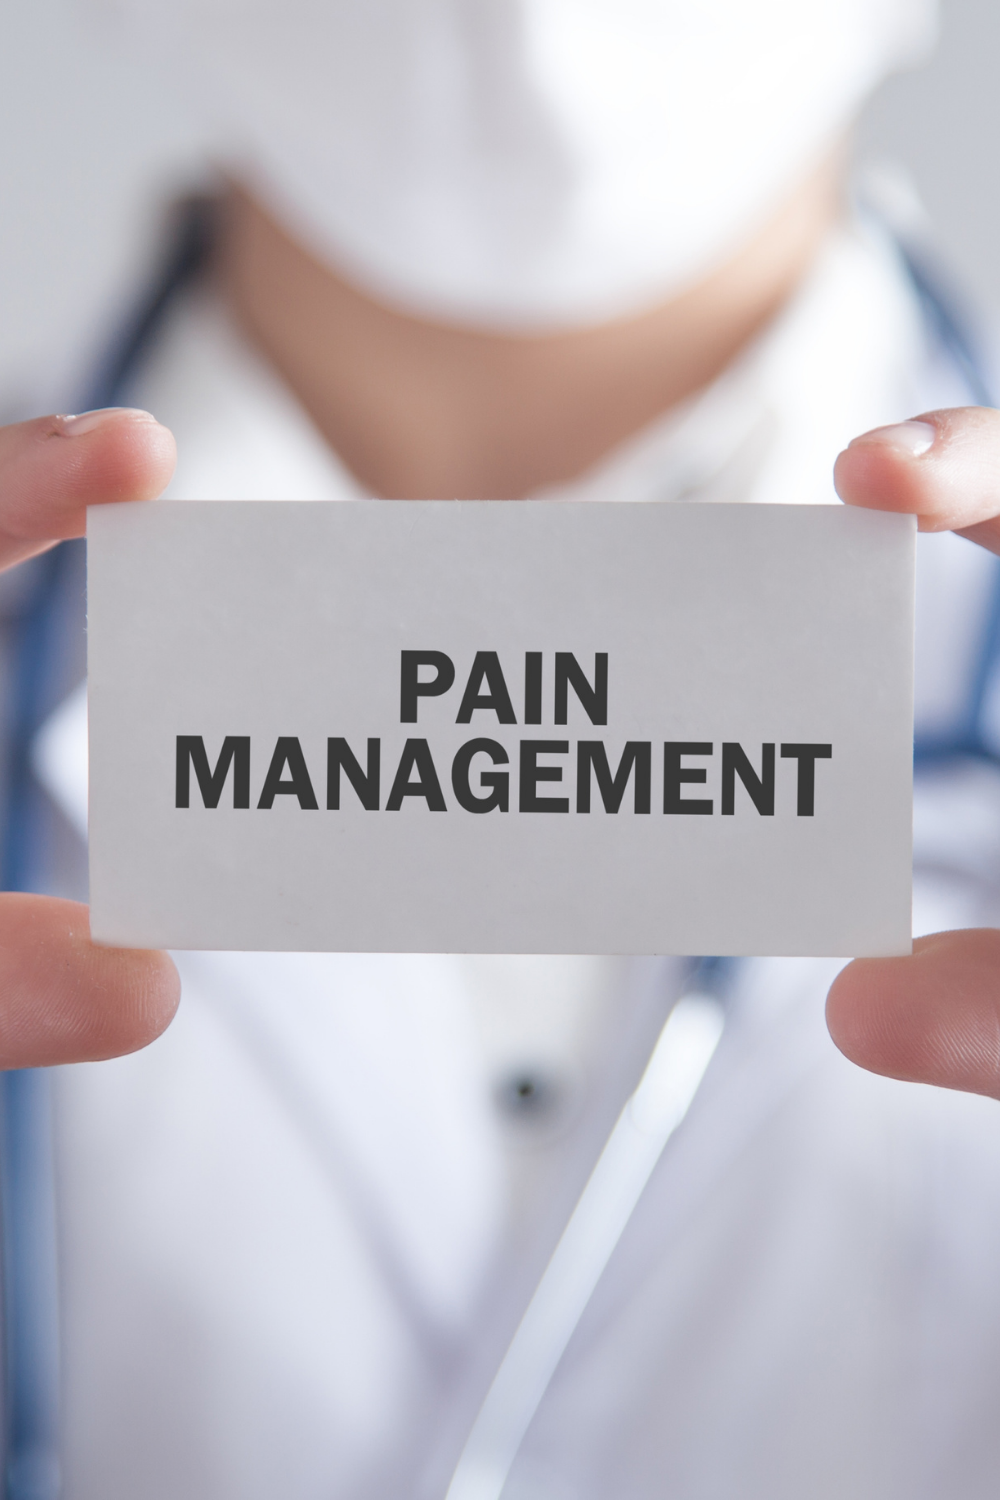 Expert Pain Management & Alternative Medicine in Walnut Creek, CA